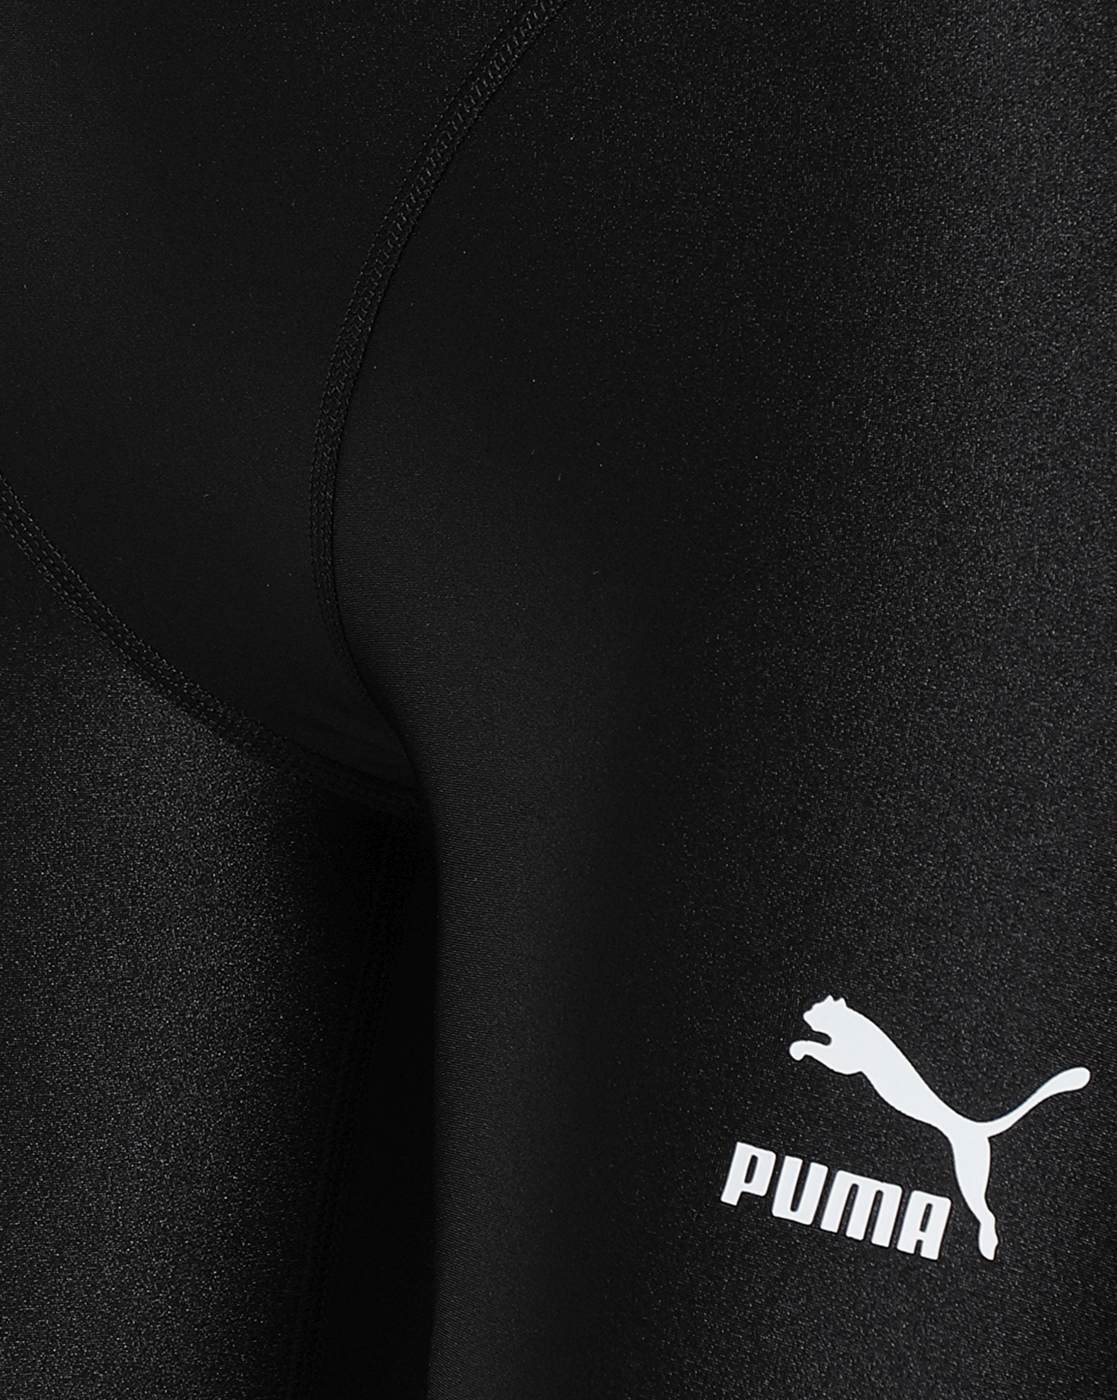 Buy PUMA Women's Everyday Train Graphic Leggings,Puma Black/Copper Lacing  Print,Medium at Amazon.in